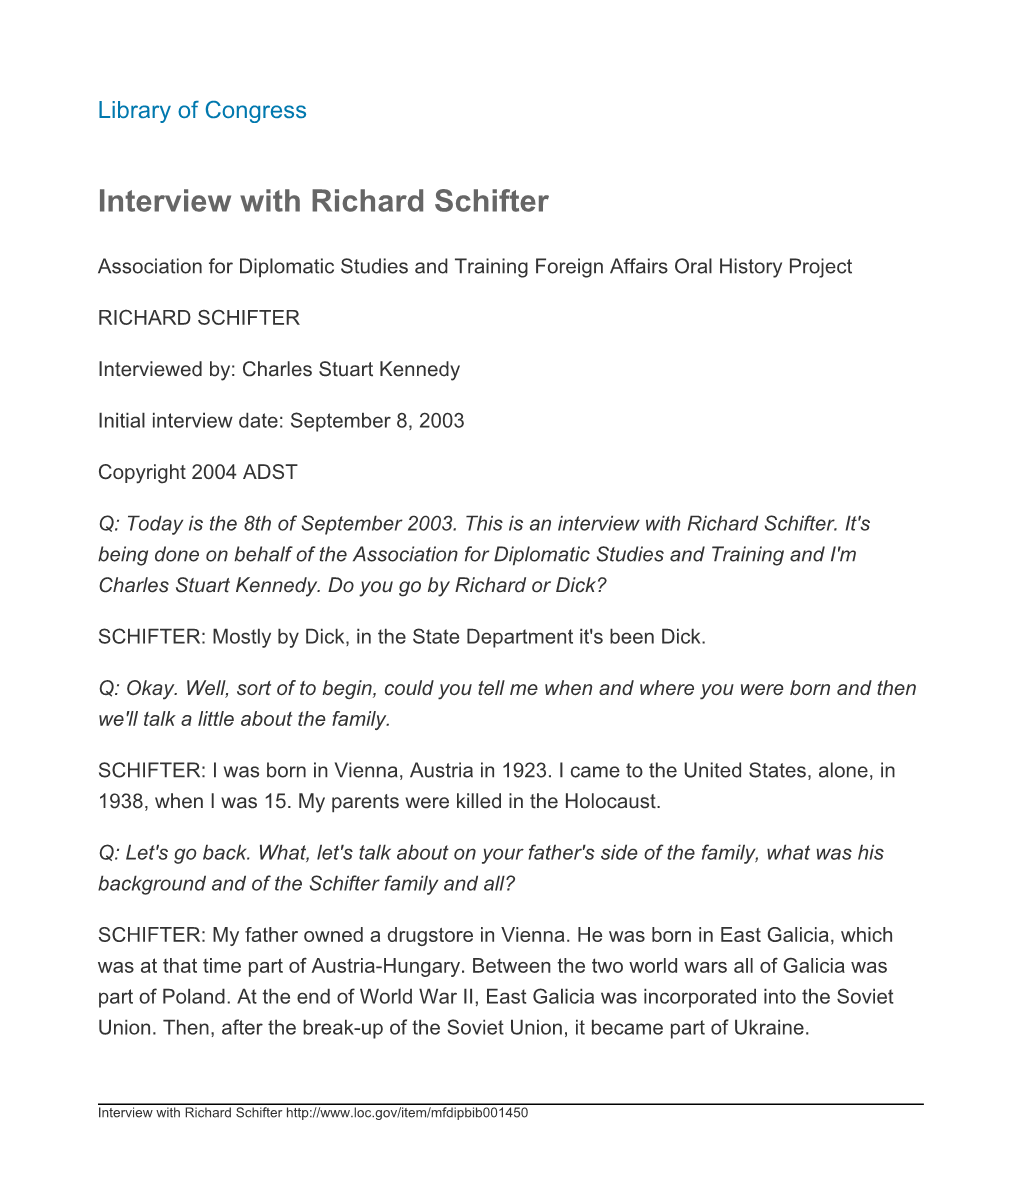 Interview with Richard Schifter